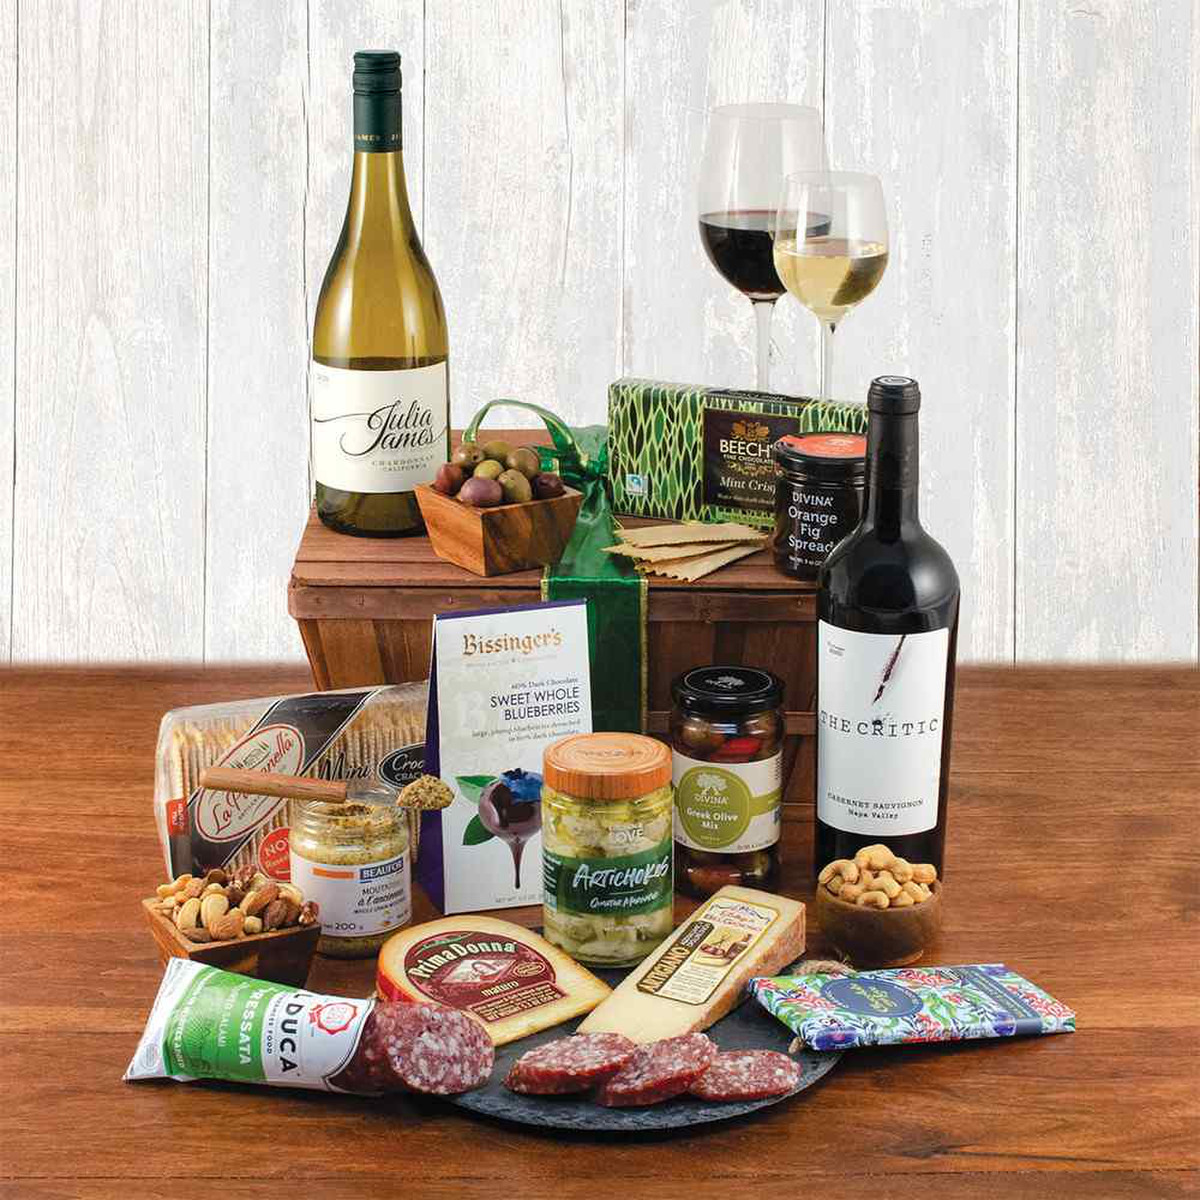 The Critic Napa Cabernet and Julia James Chardonnay Wine and Artisanal Food Gift Basket